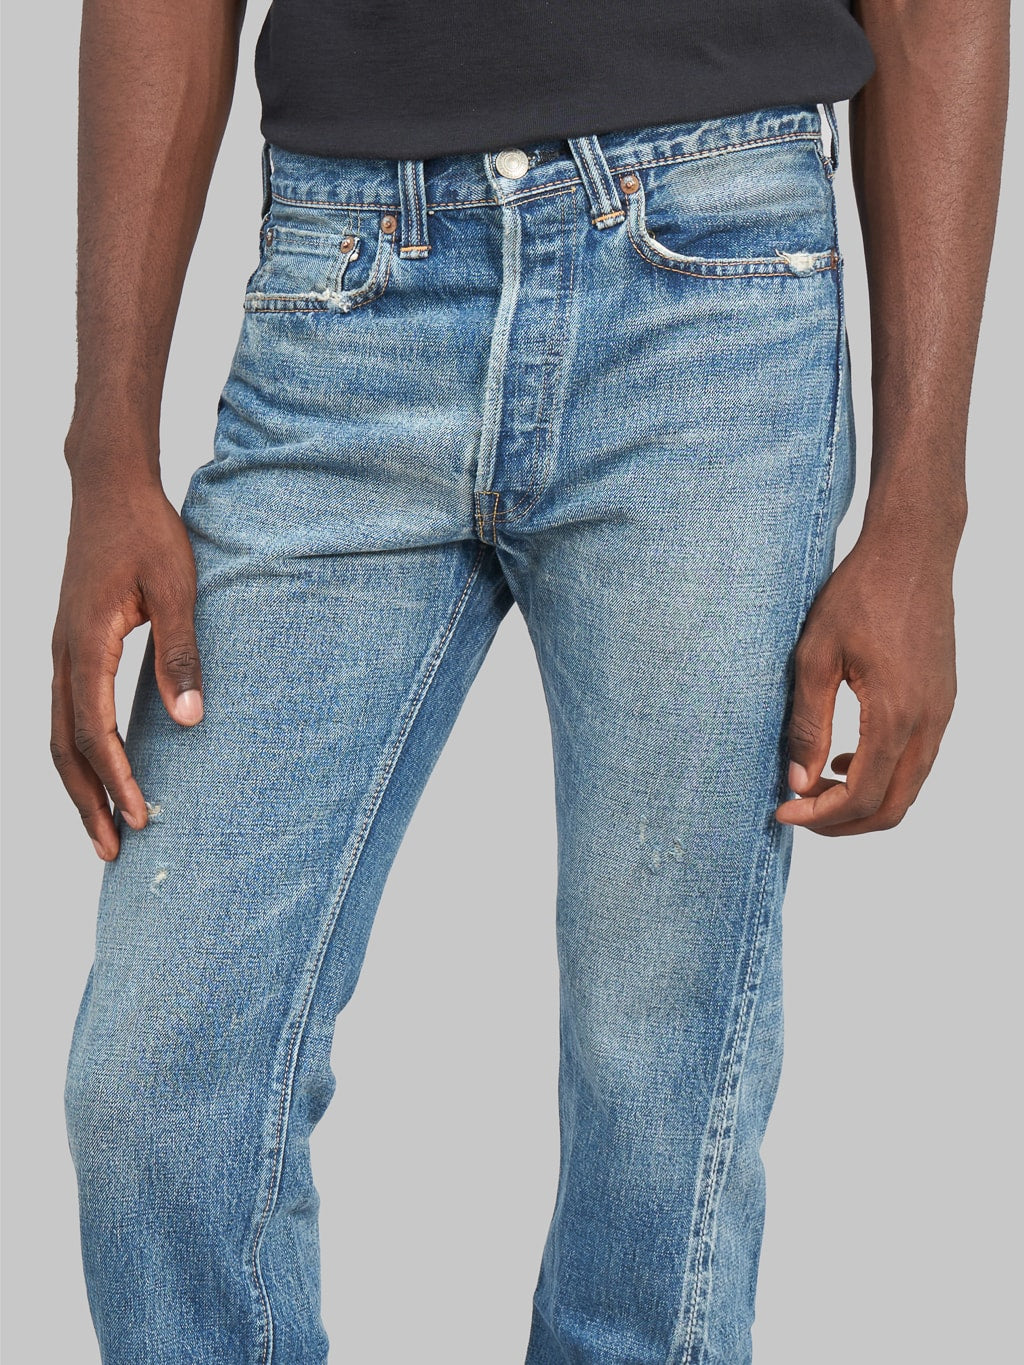 Fullcount 1108 Dartford Slim Straight Jeans mid rise